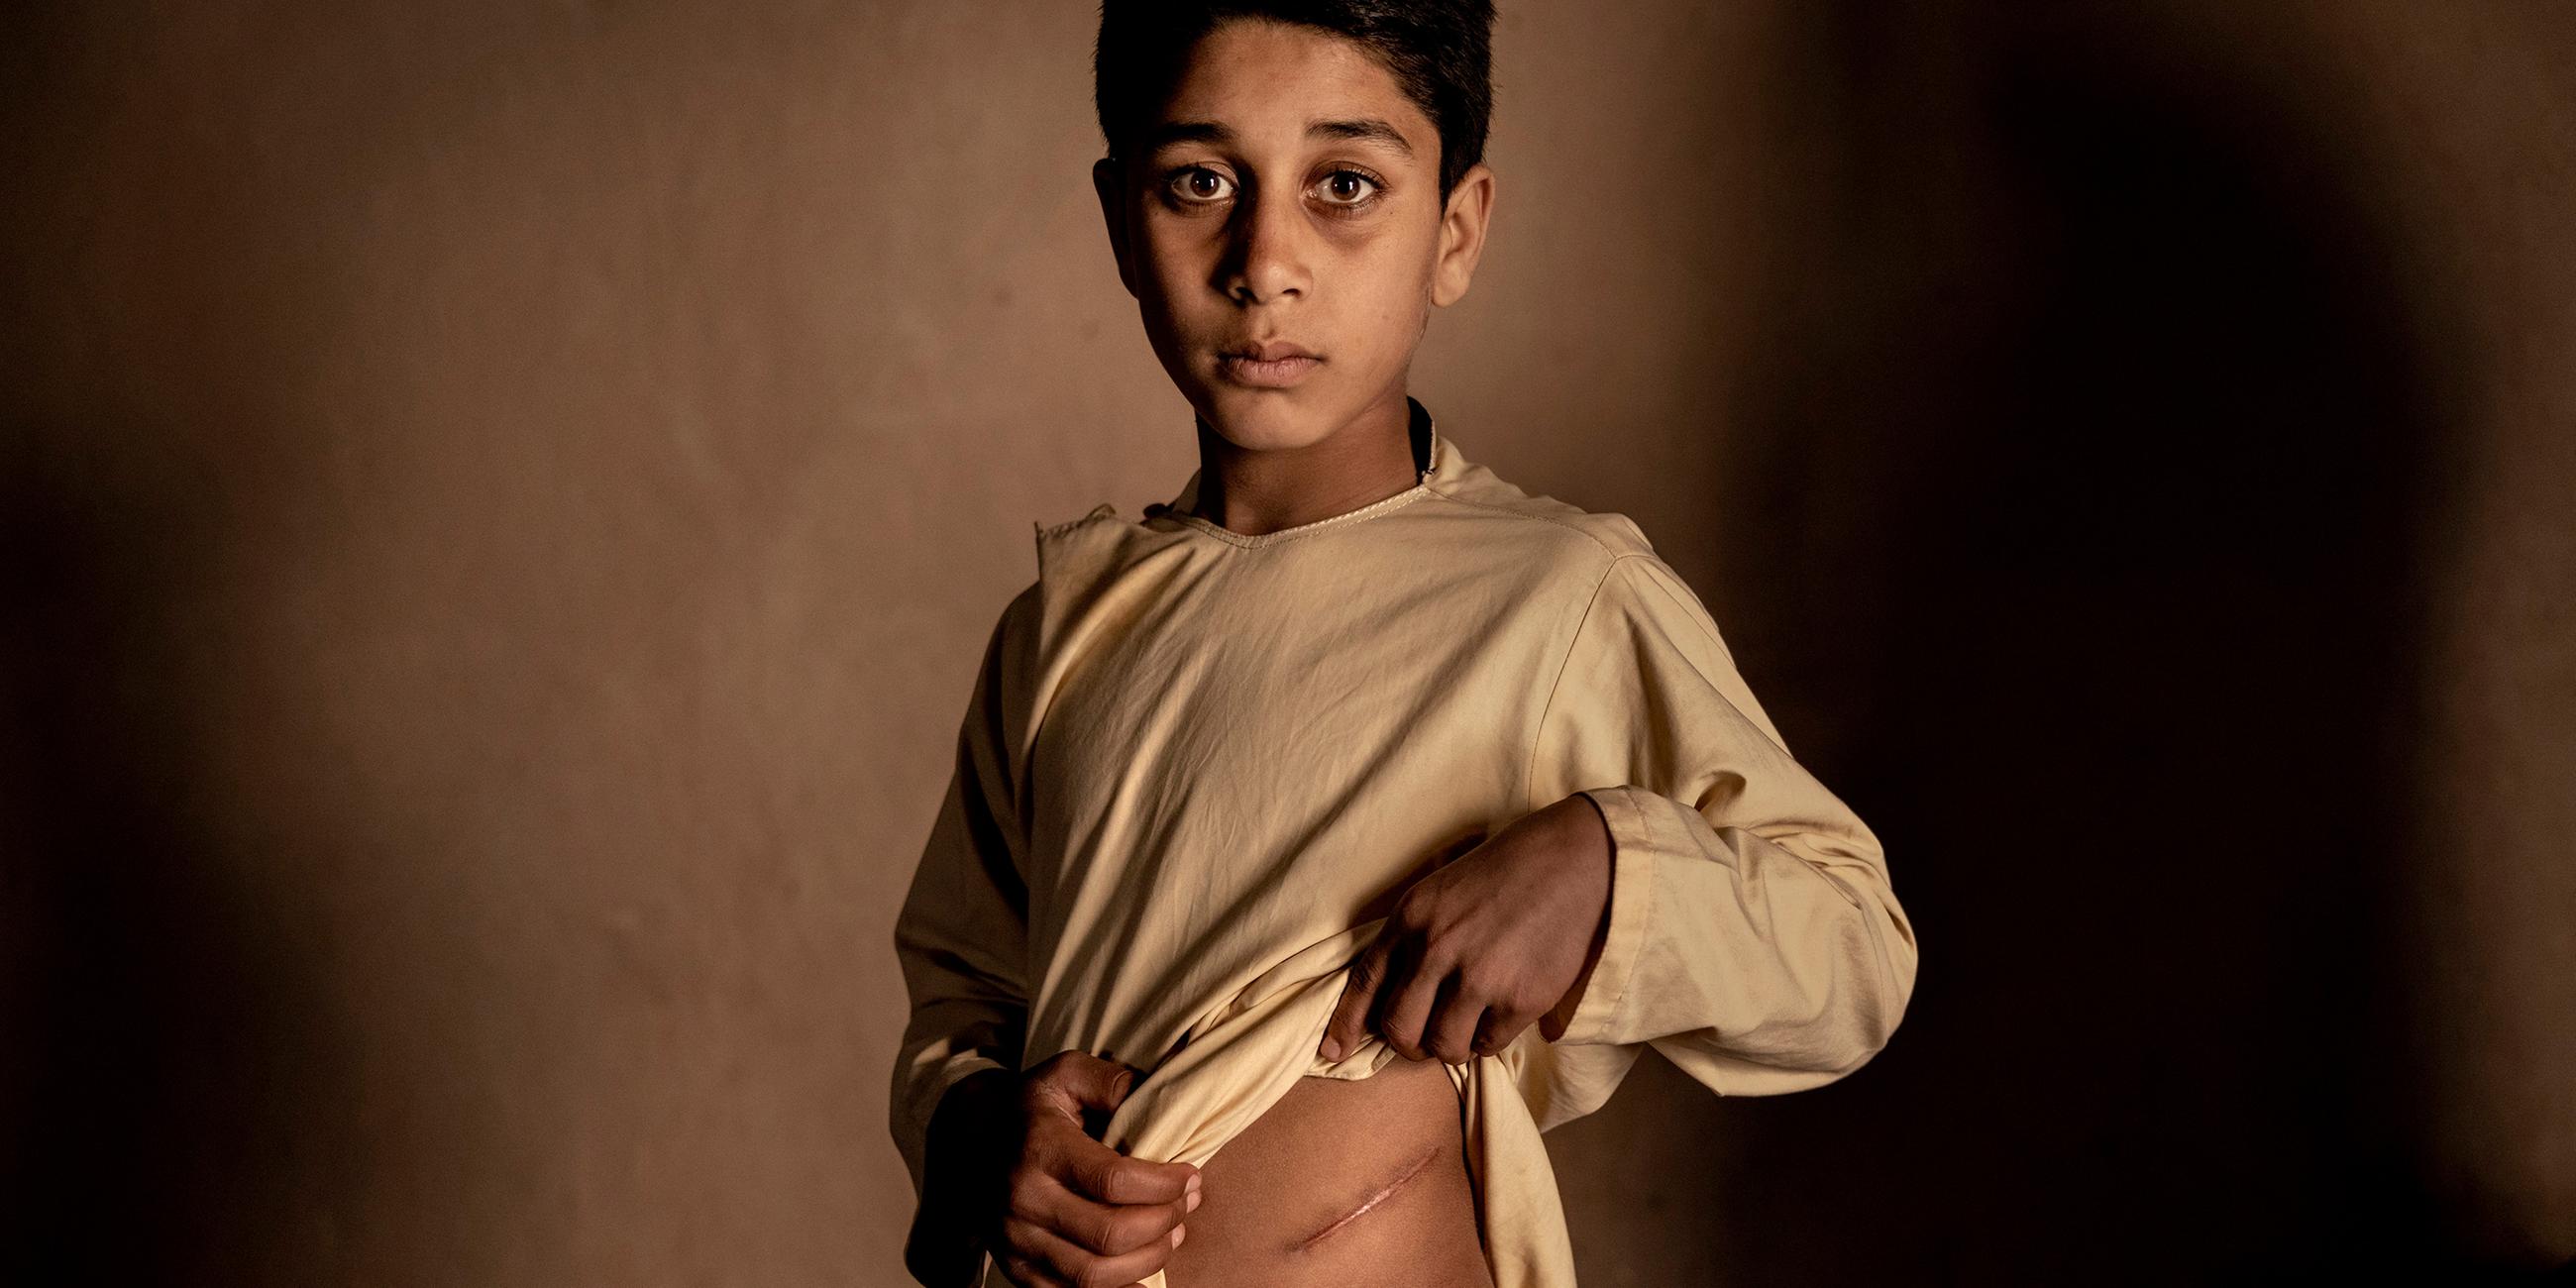 Unicef-Fotos des Jahres: Junge mit Narbe. Der 15-jährige Khalil Ahmad aus Afghanistan